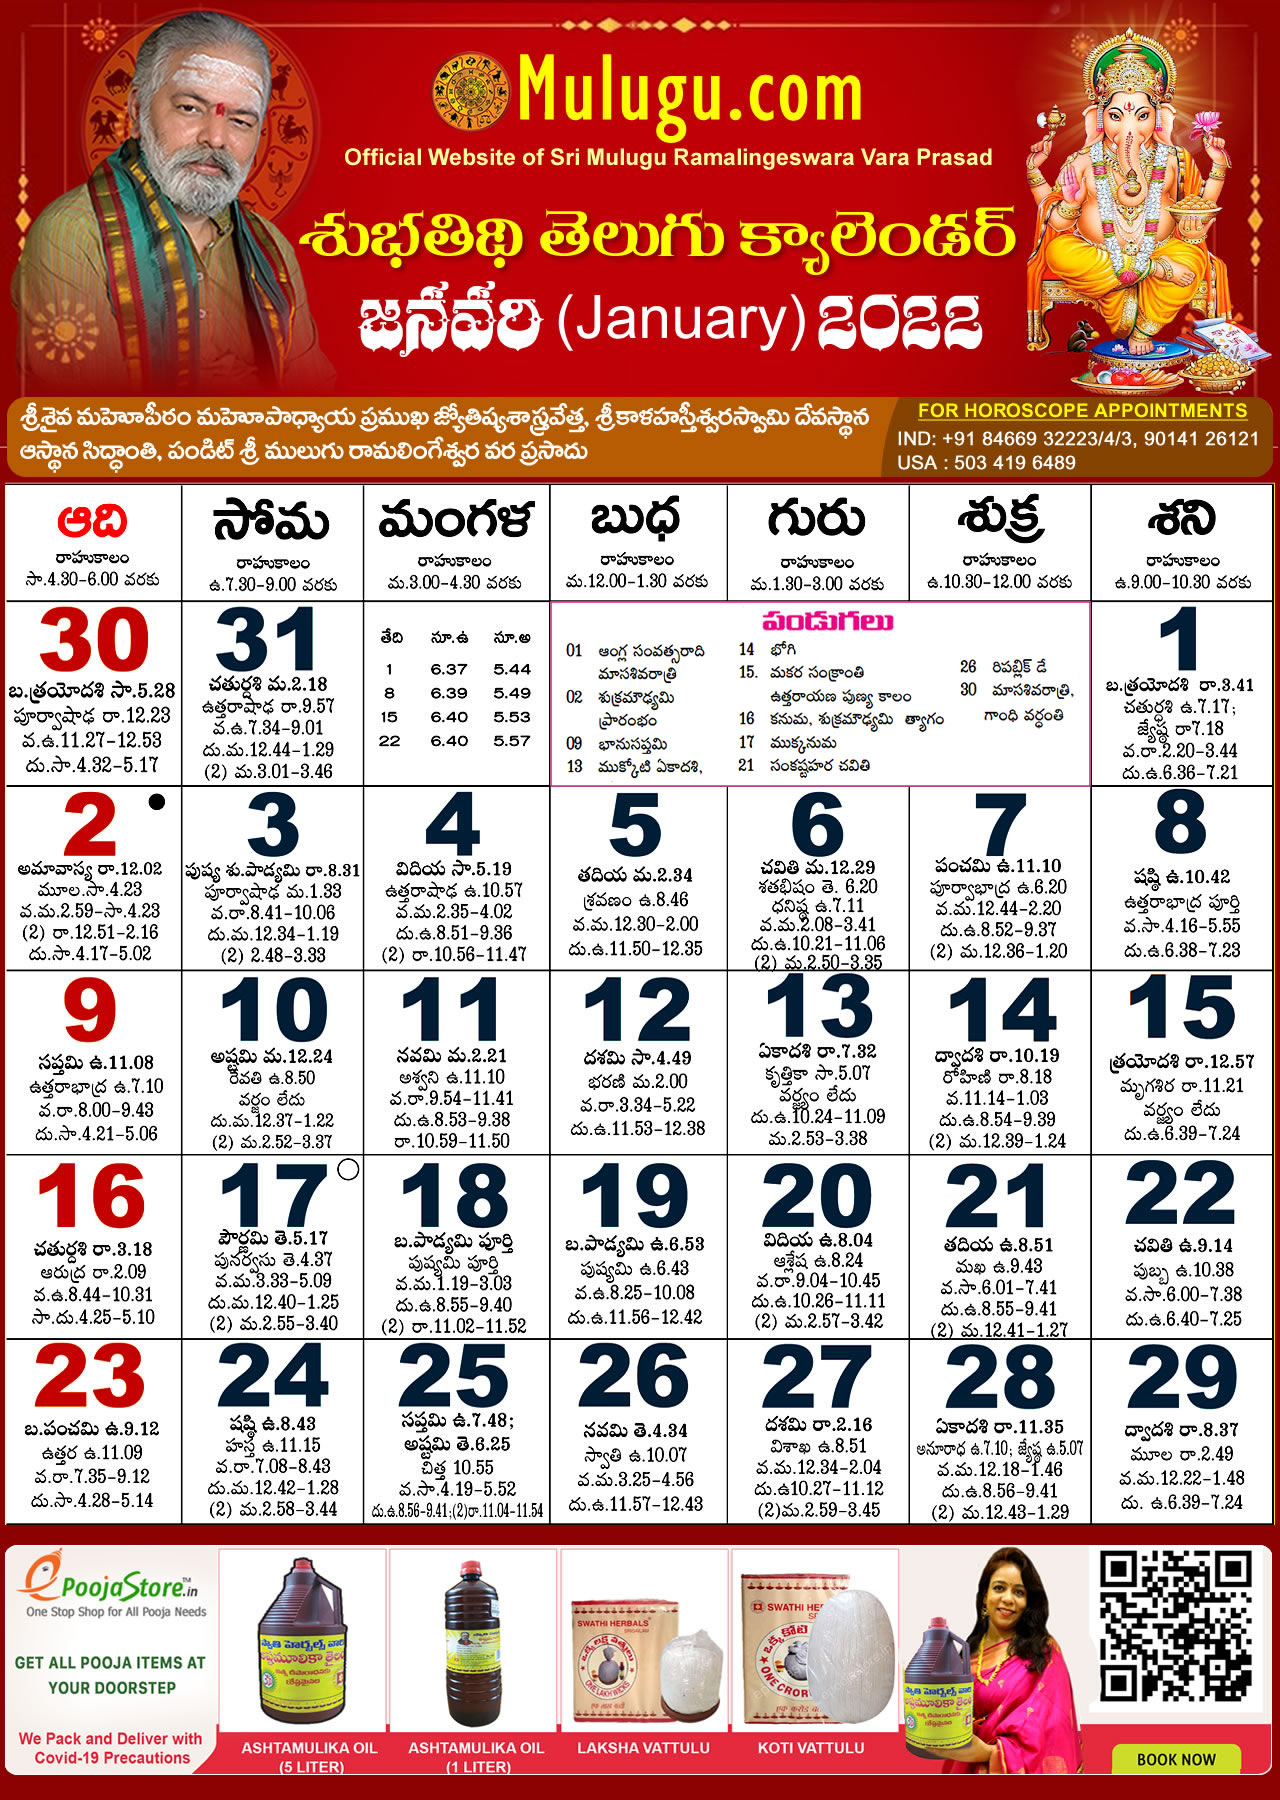 Mulugu Telugu Calendar 2022 Subhathidi January Telugu Calendar 2022 | Telugu Calendar 2022 - 2023 |  Telugu Subhathidi Calendar 2022 | Calendar 2022 | Telugu Calendar 2022 |  Subhathidi Calendar 2022 - Chicago Calendar 2022 Los